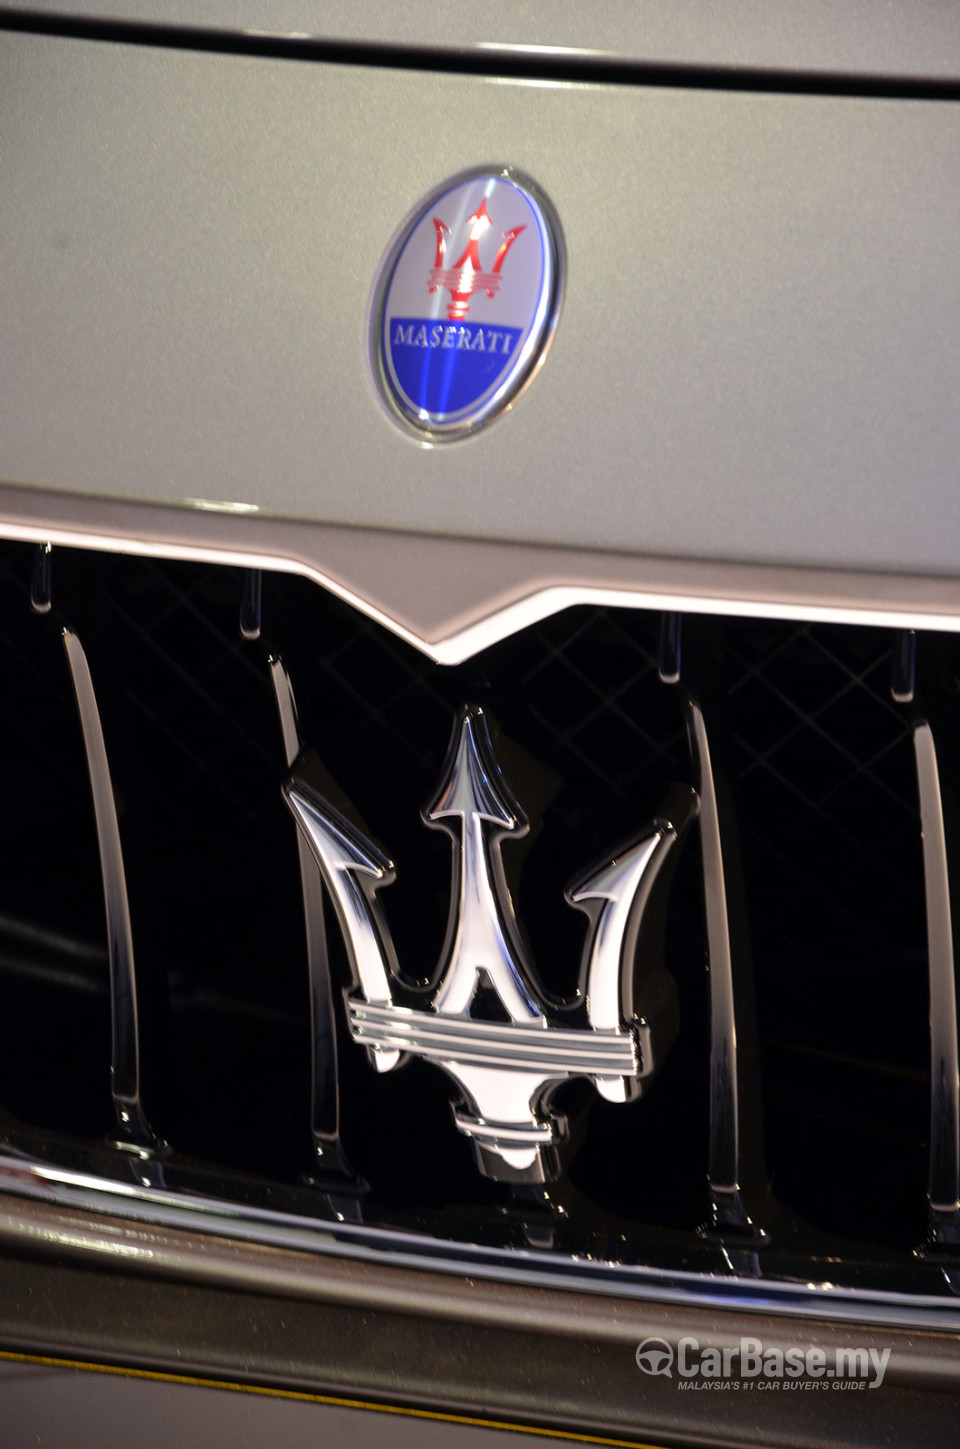 Maserati Ghibli Mk1 (2014) Exterior